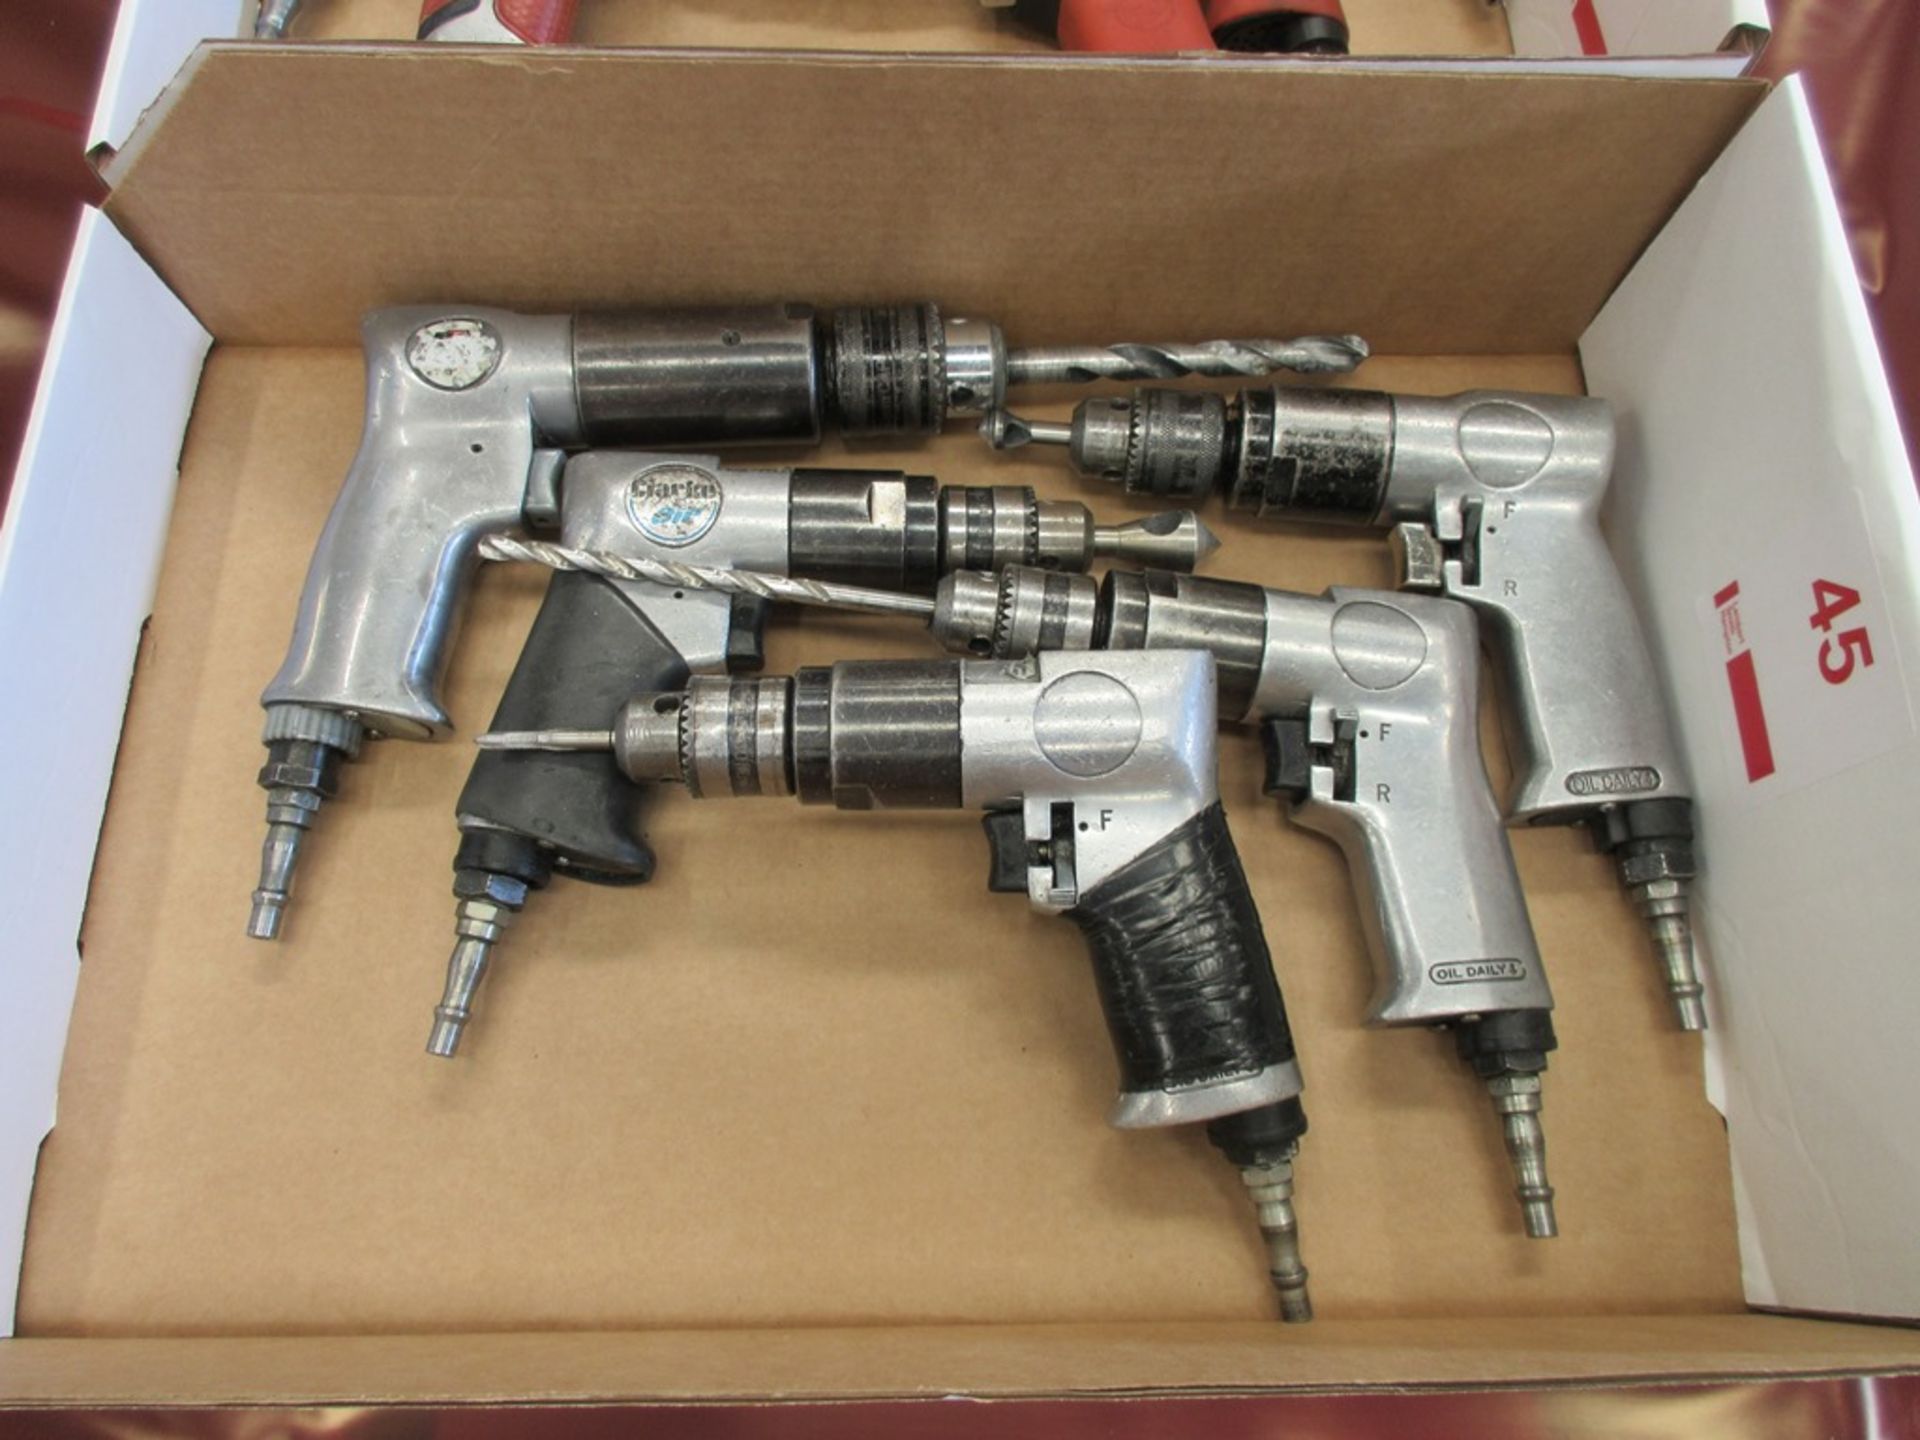 Five assorted pneumatic pistol grip drills